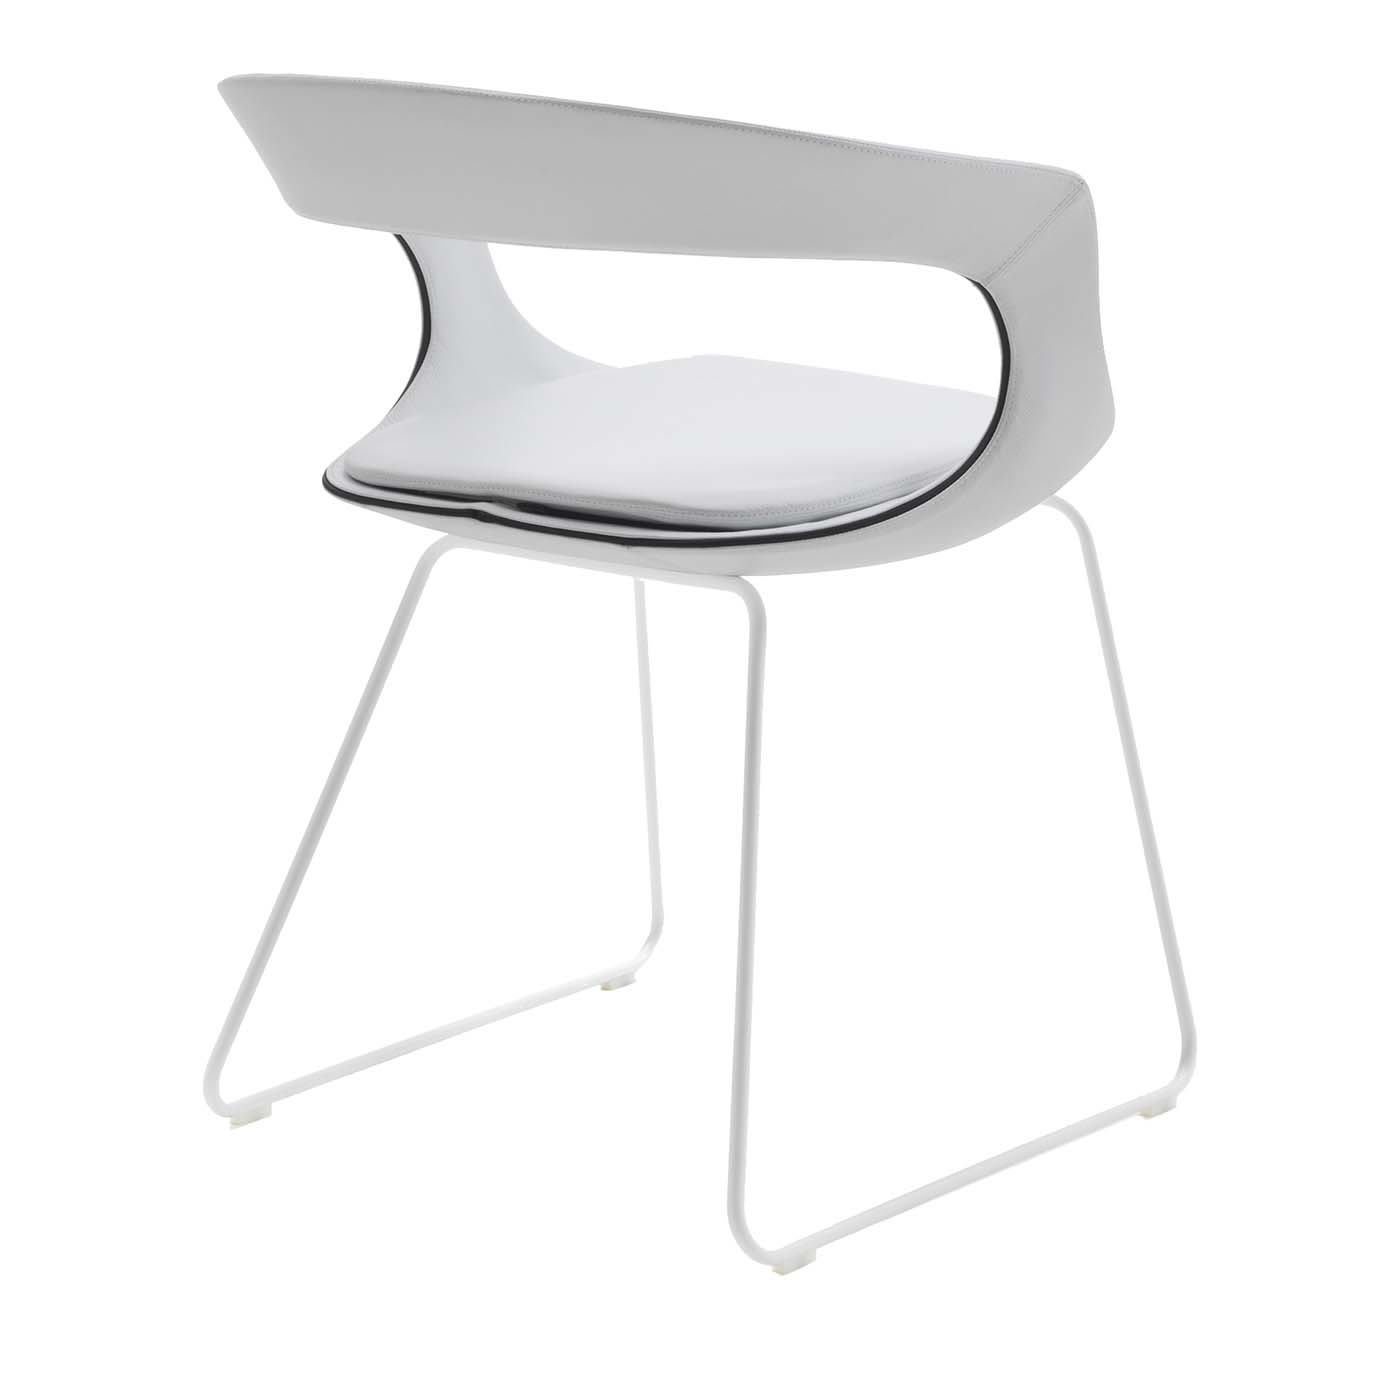 Frenchkiss Low-Backed Sled-Base Chair by Stefano Bigi - Enrico Pellizzoni